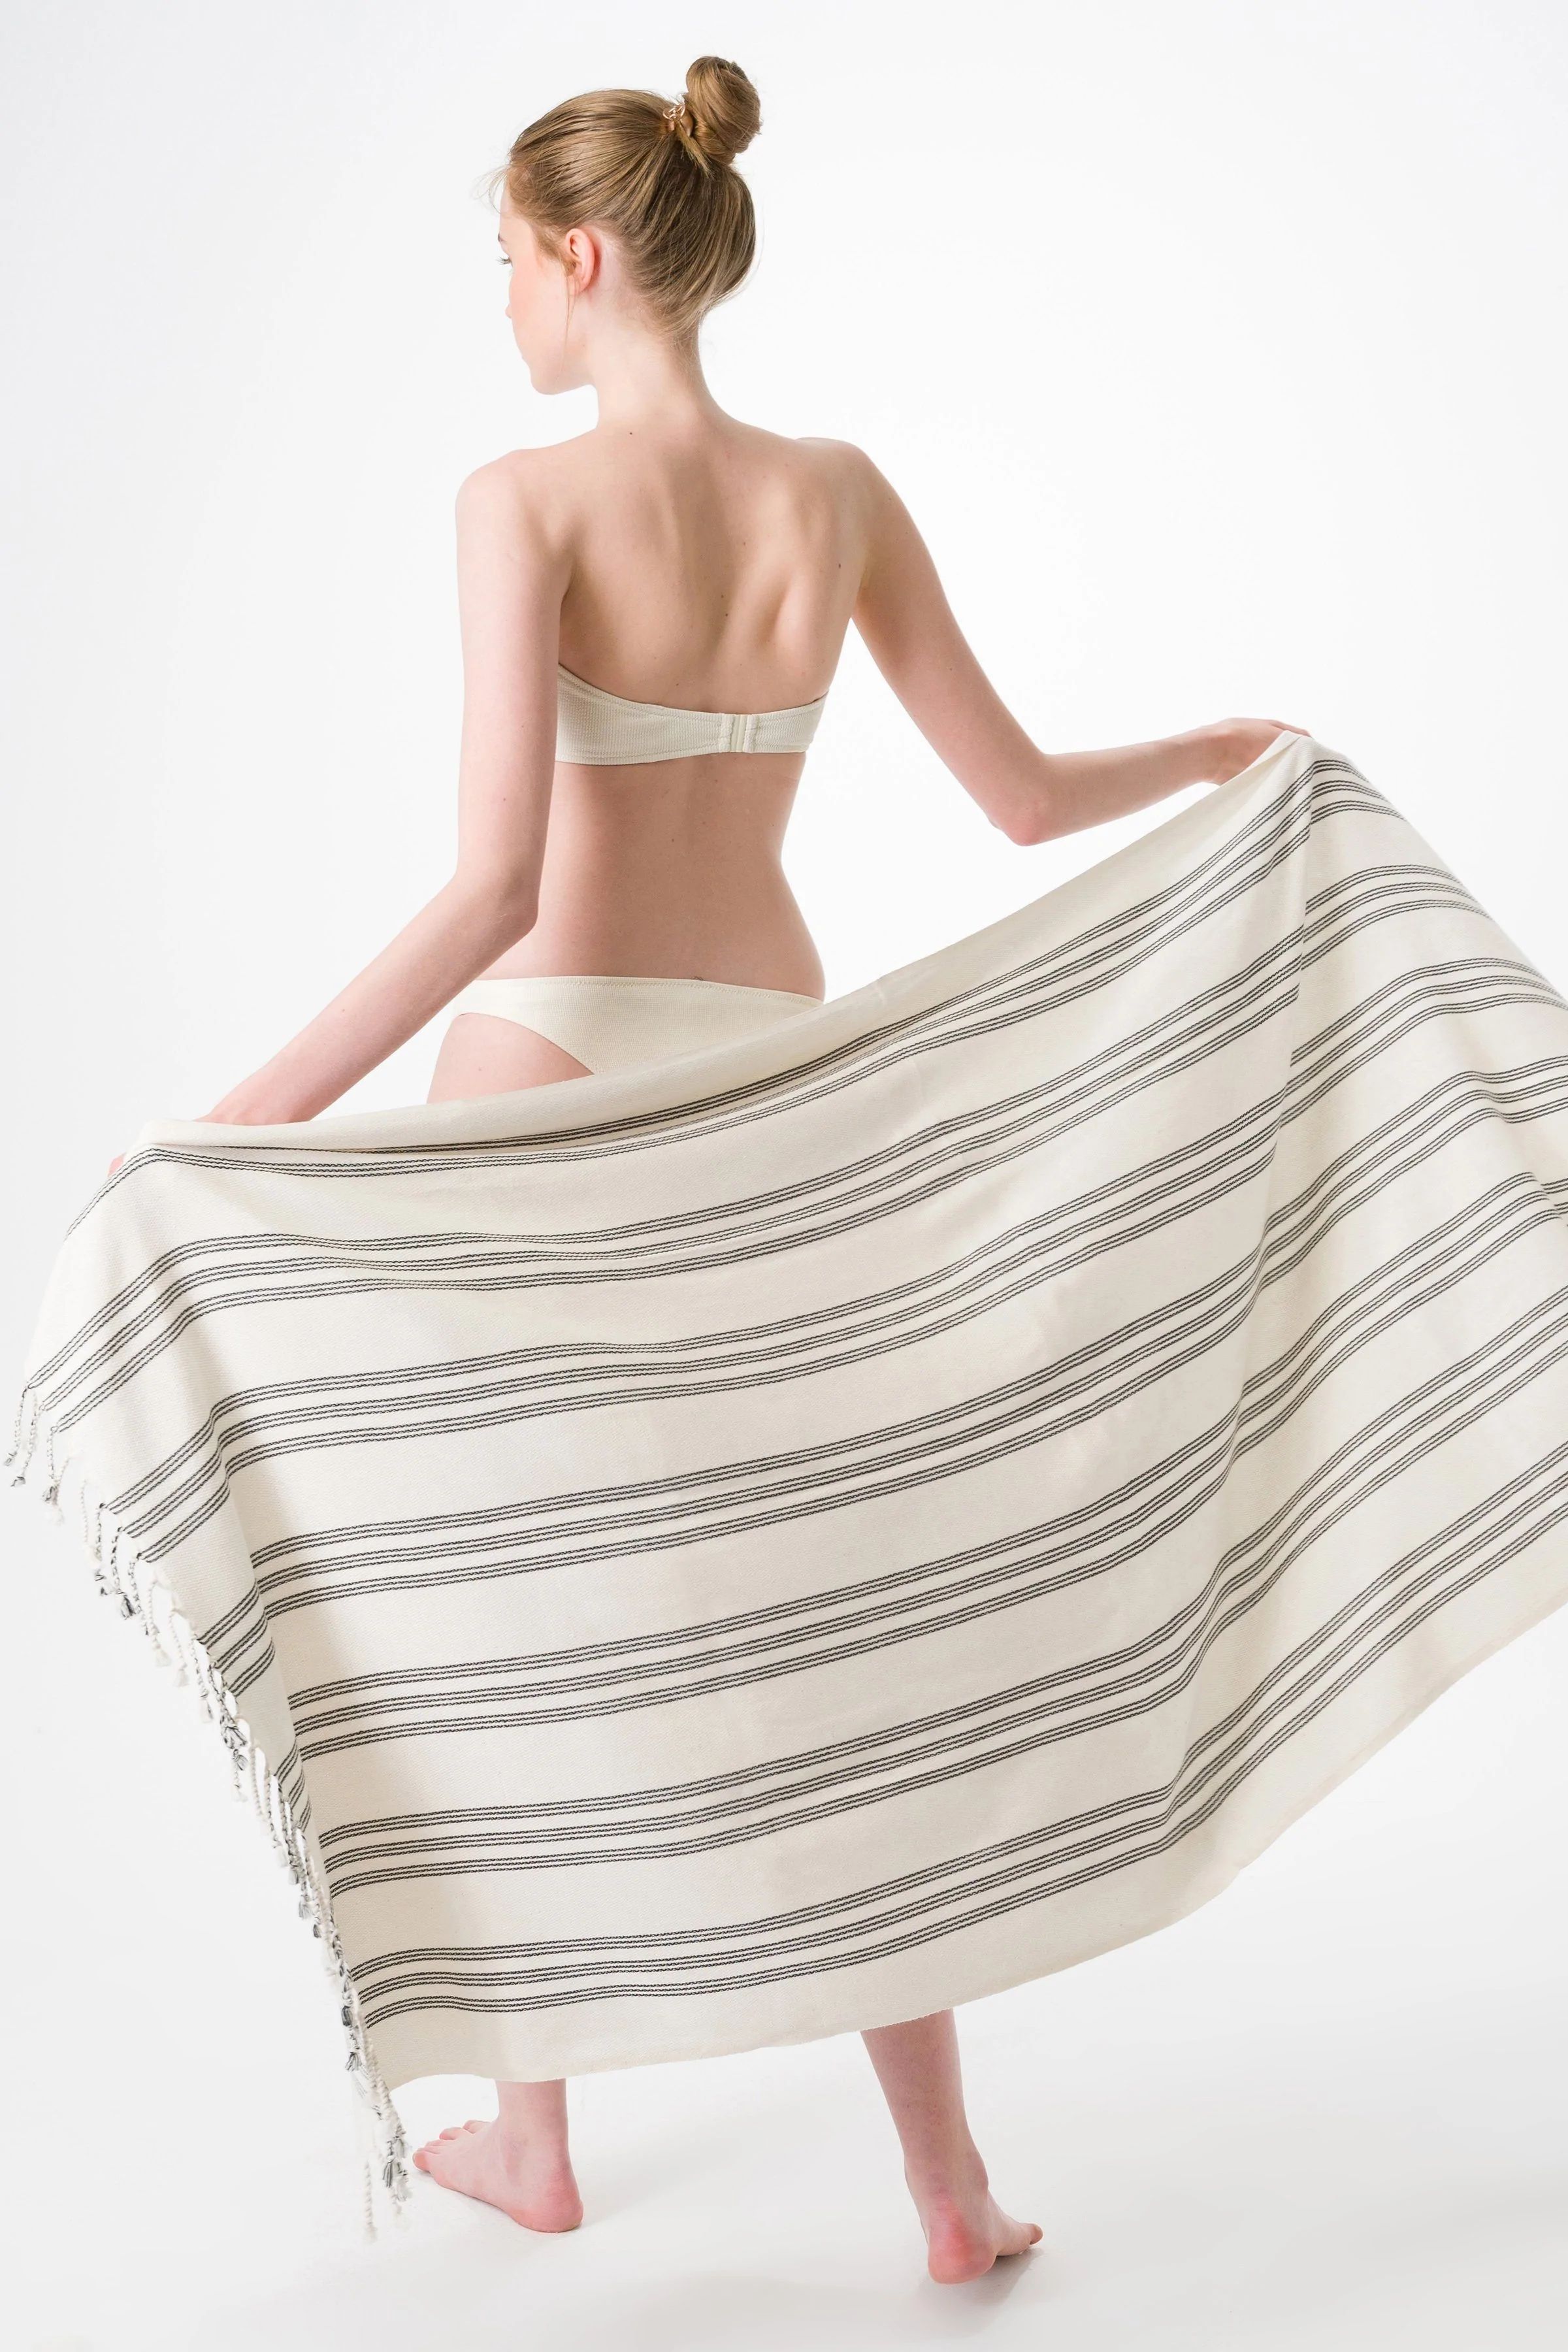 Allora Turkish Towel / Throw | Olive and Linen LLC